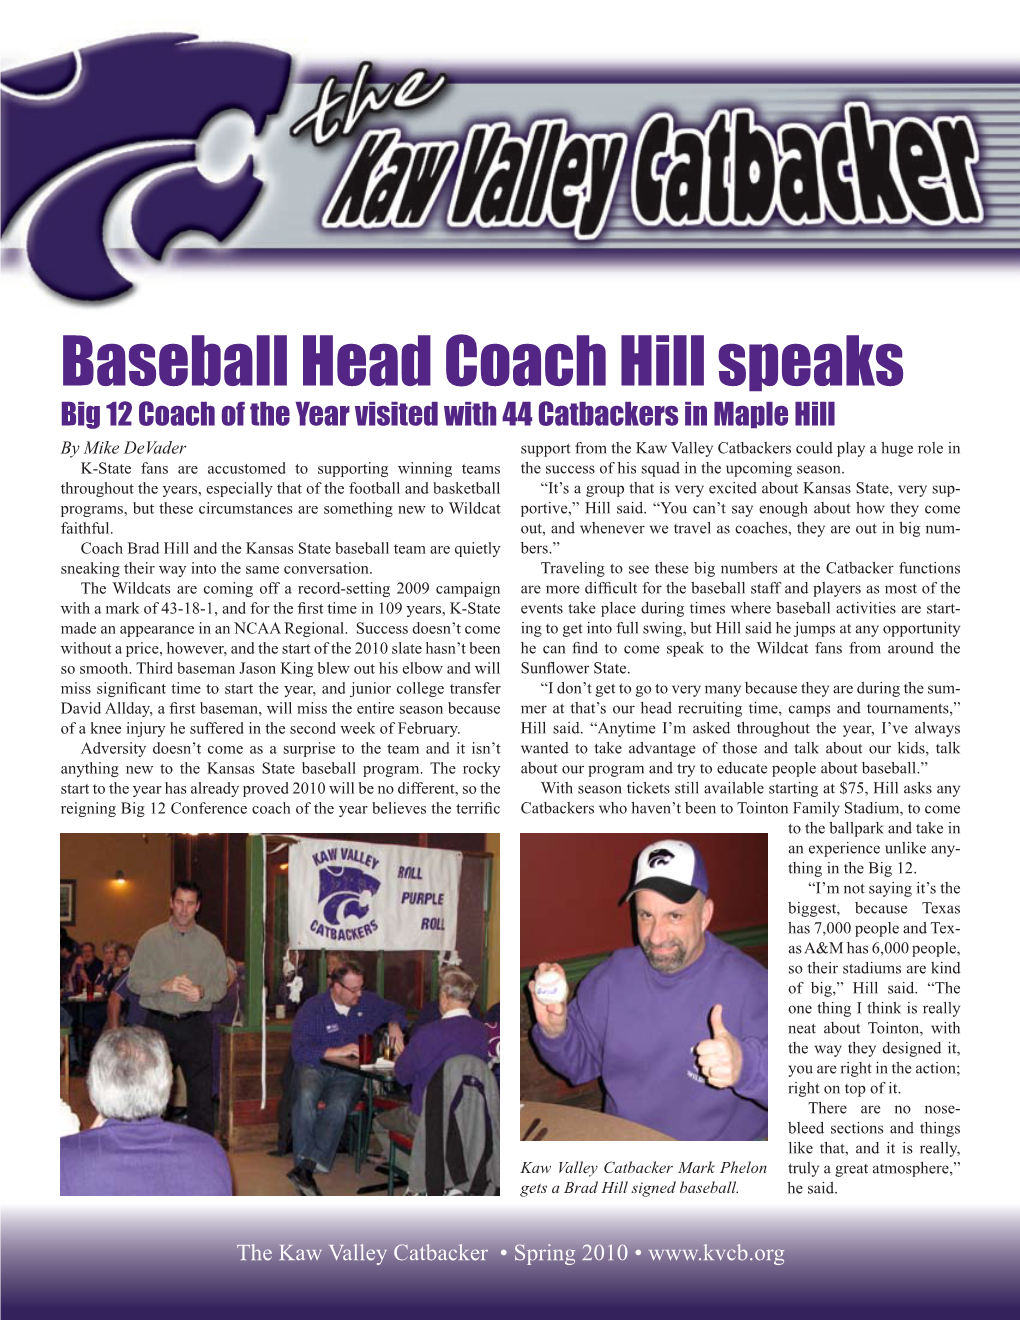 Baseball Head Coach Hill Speaks